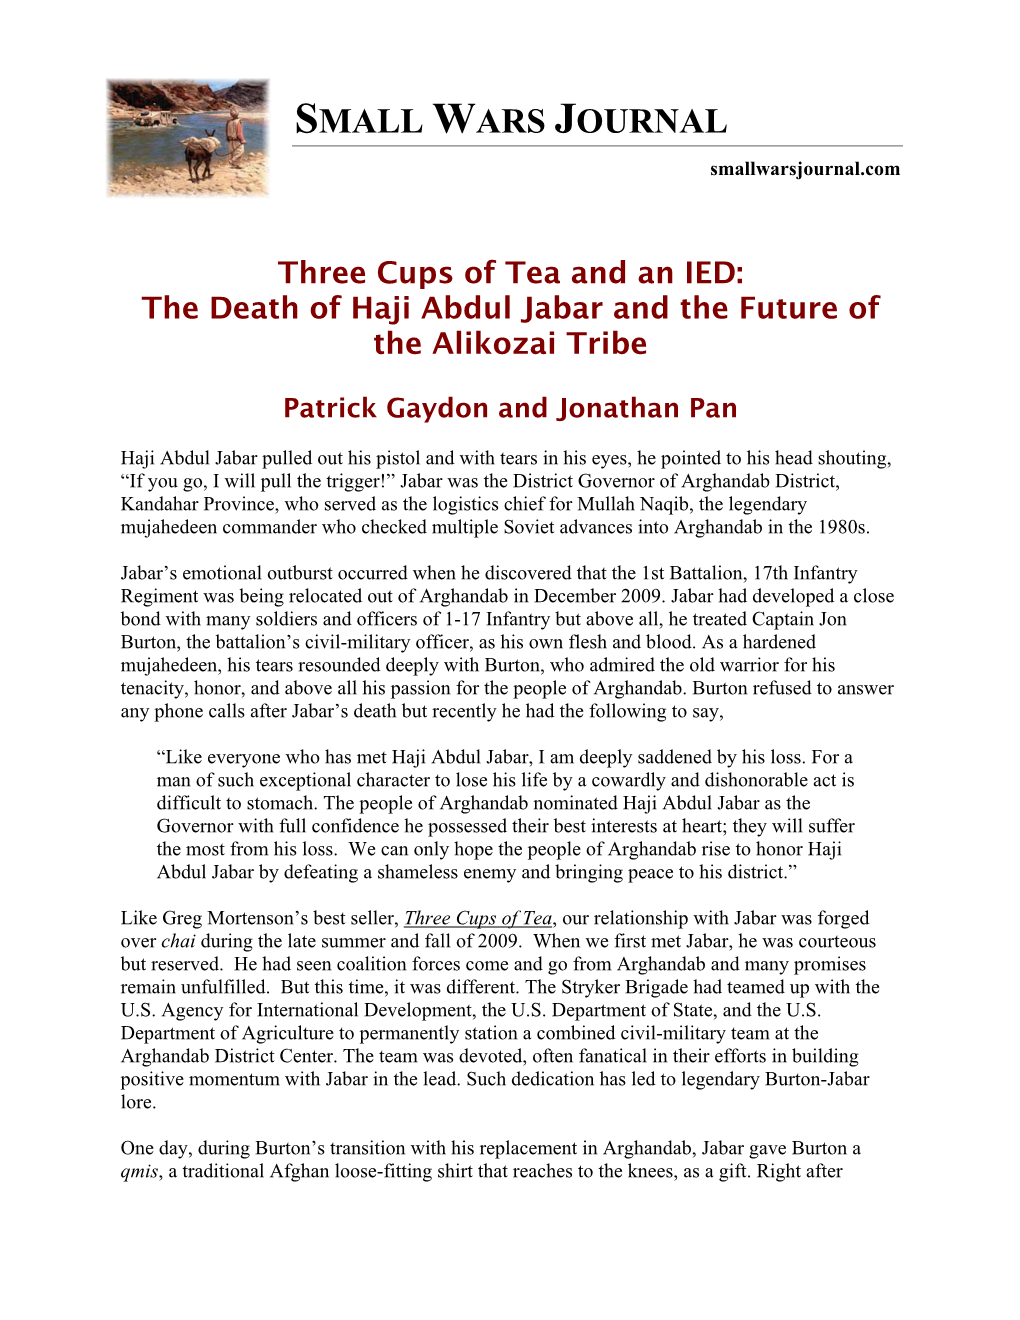 The Death of Haji Abdul Jabar and the Future of the Alikozai Tribe